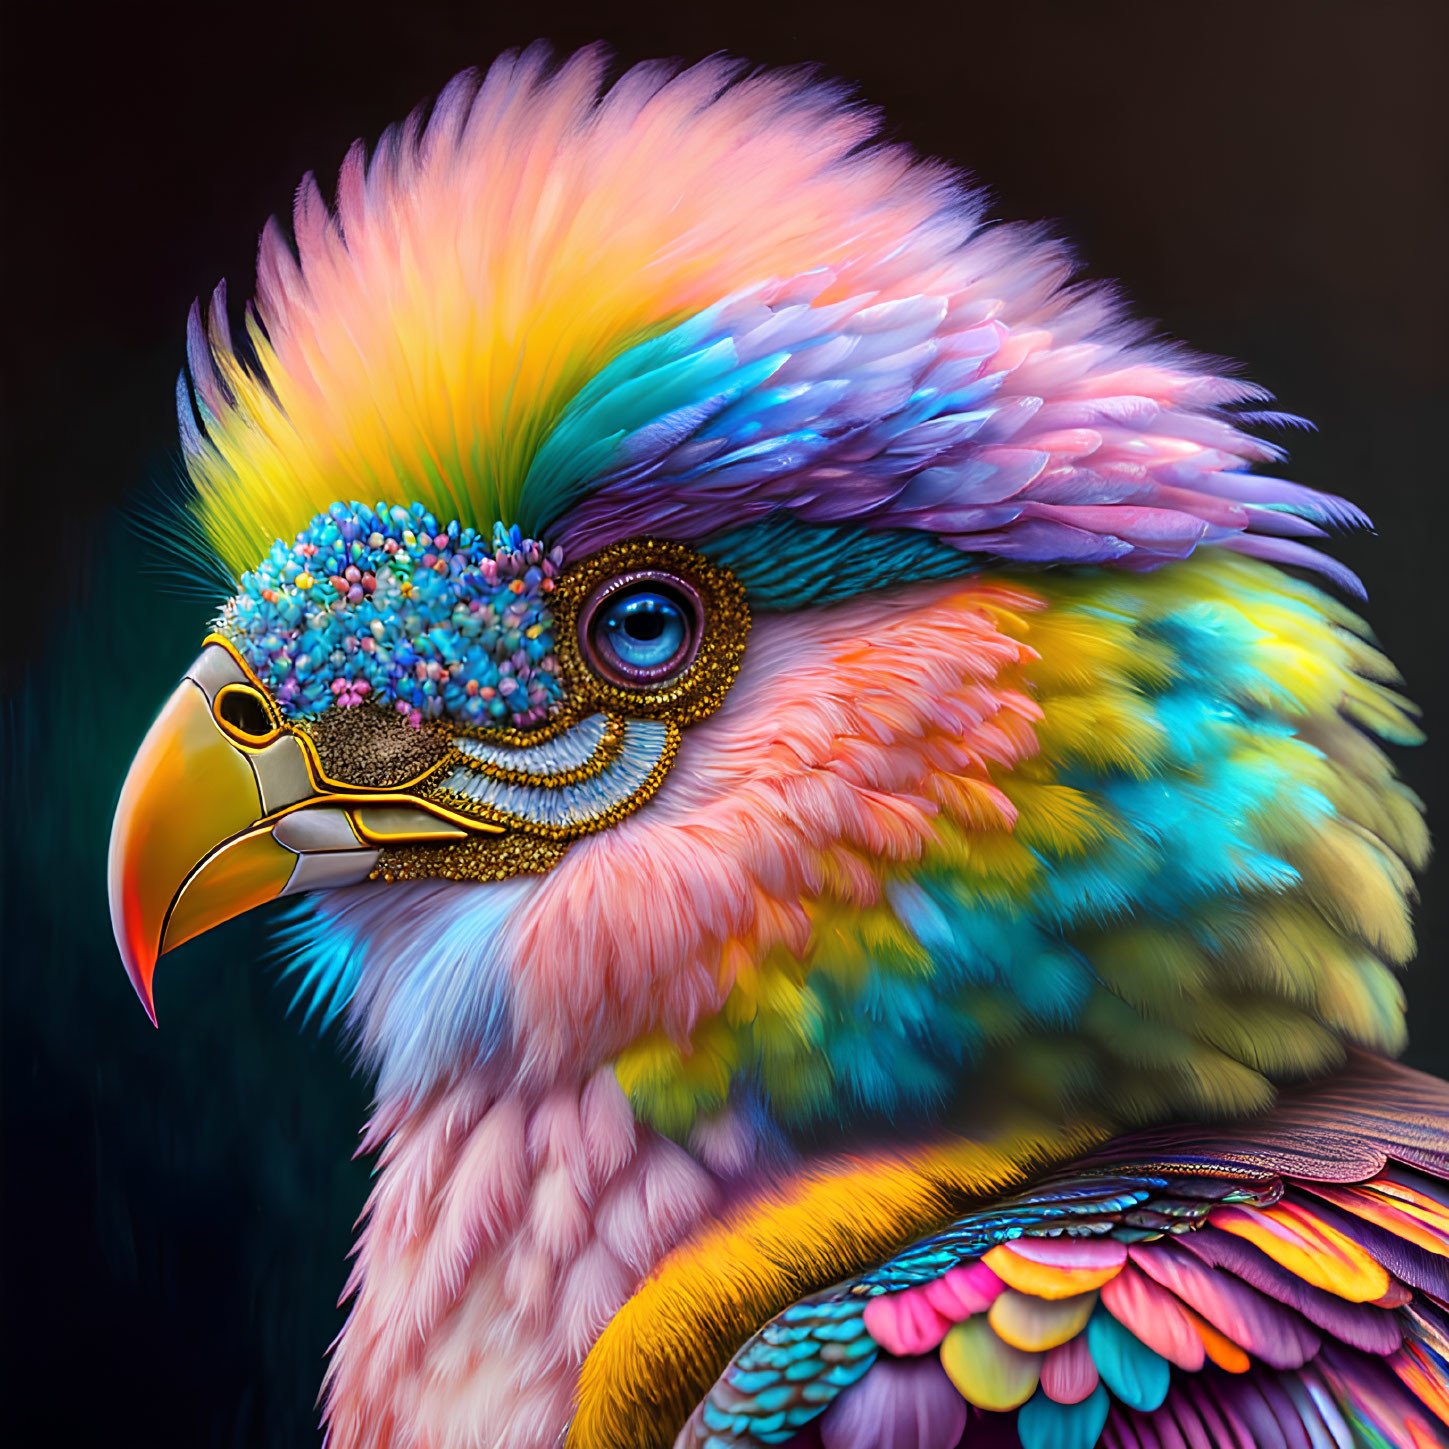 Colorful bird digital artwork with rainbow plumage and golden beak ring